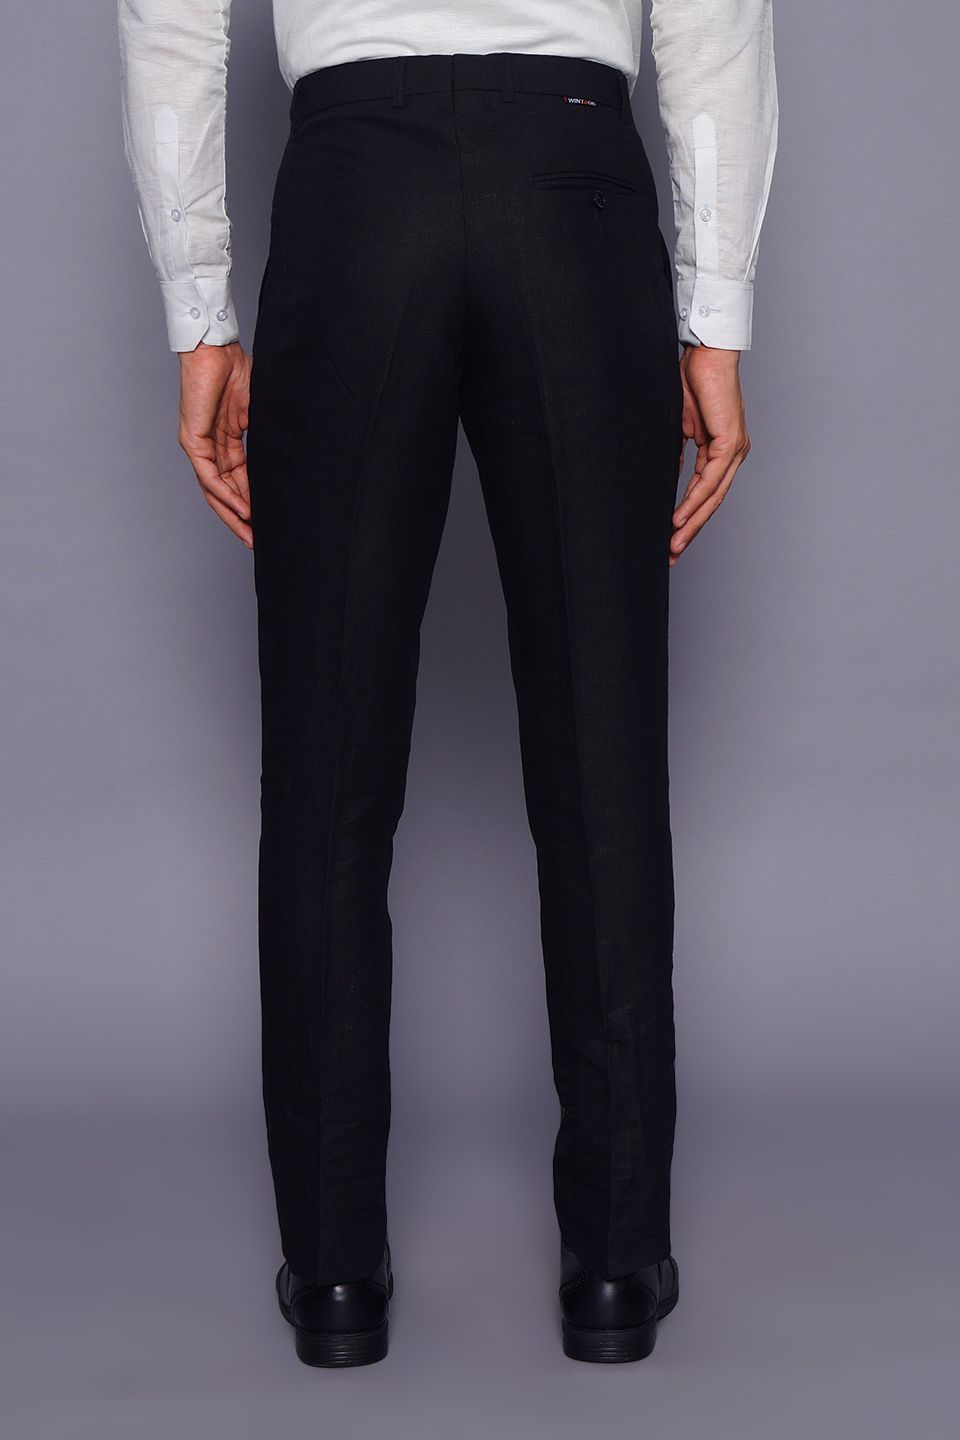 Wintage Men's Black Regular Fit Pant 100% Linen 